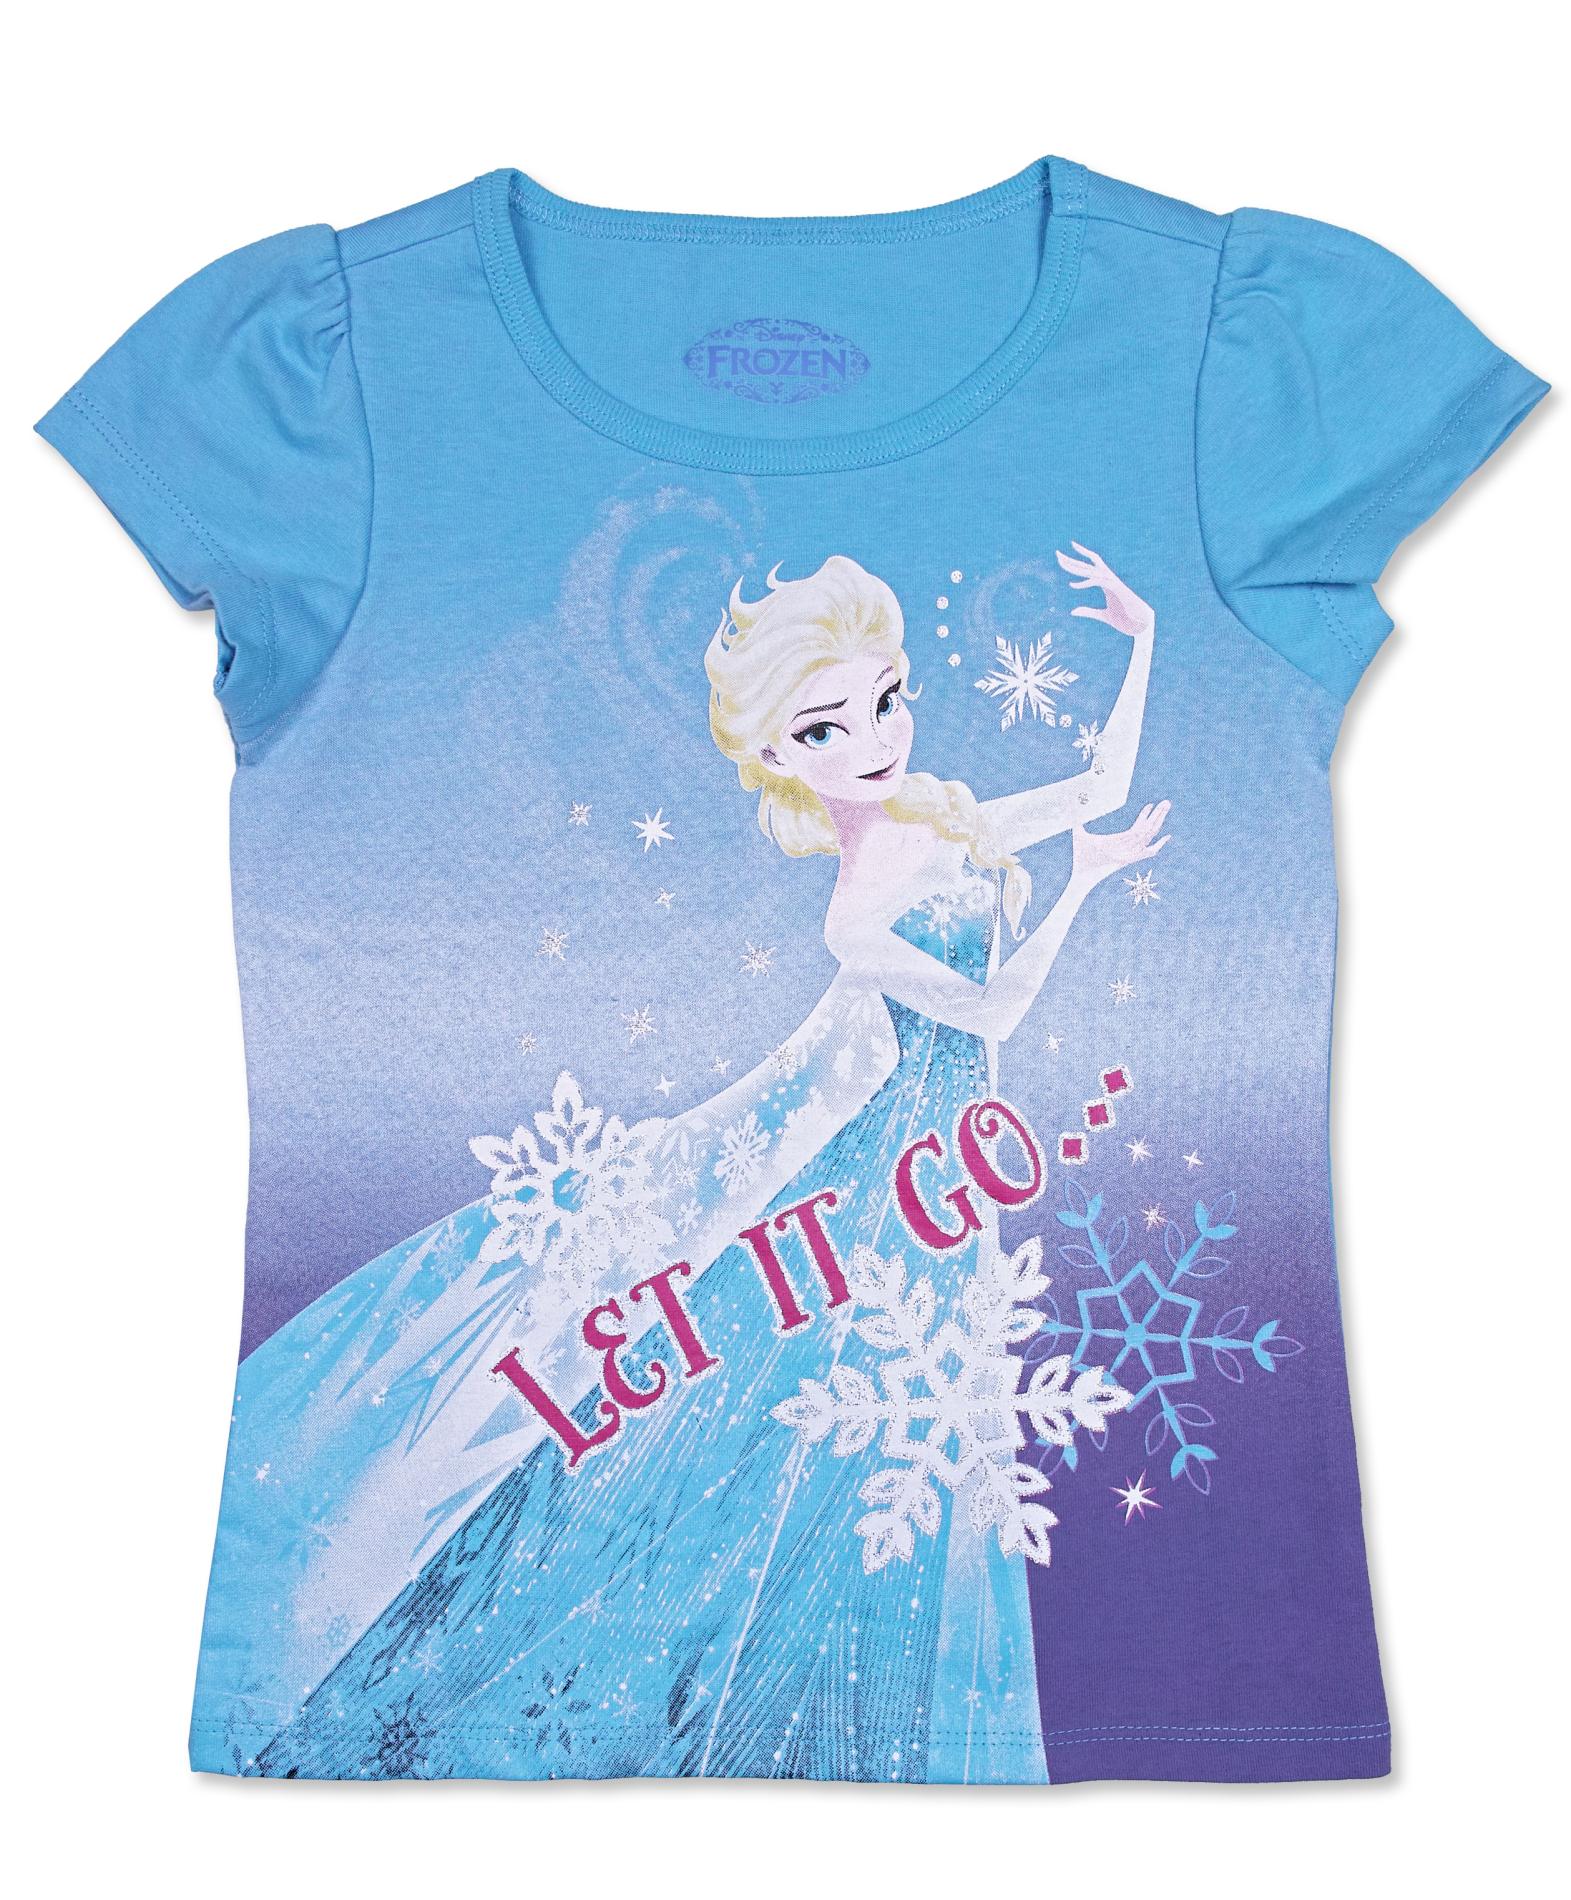 Disney Frozen Girl's T-Shirt - Elsa